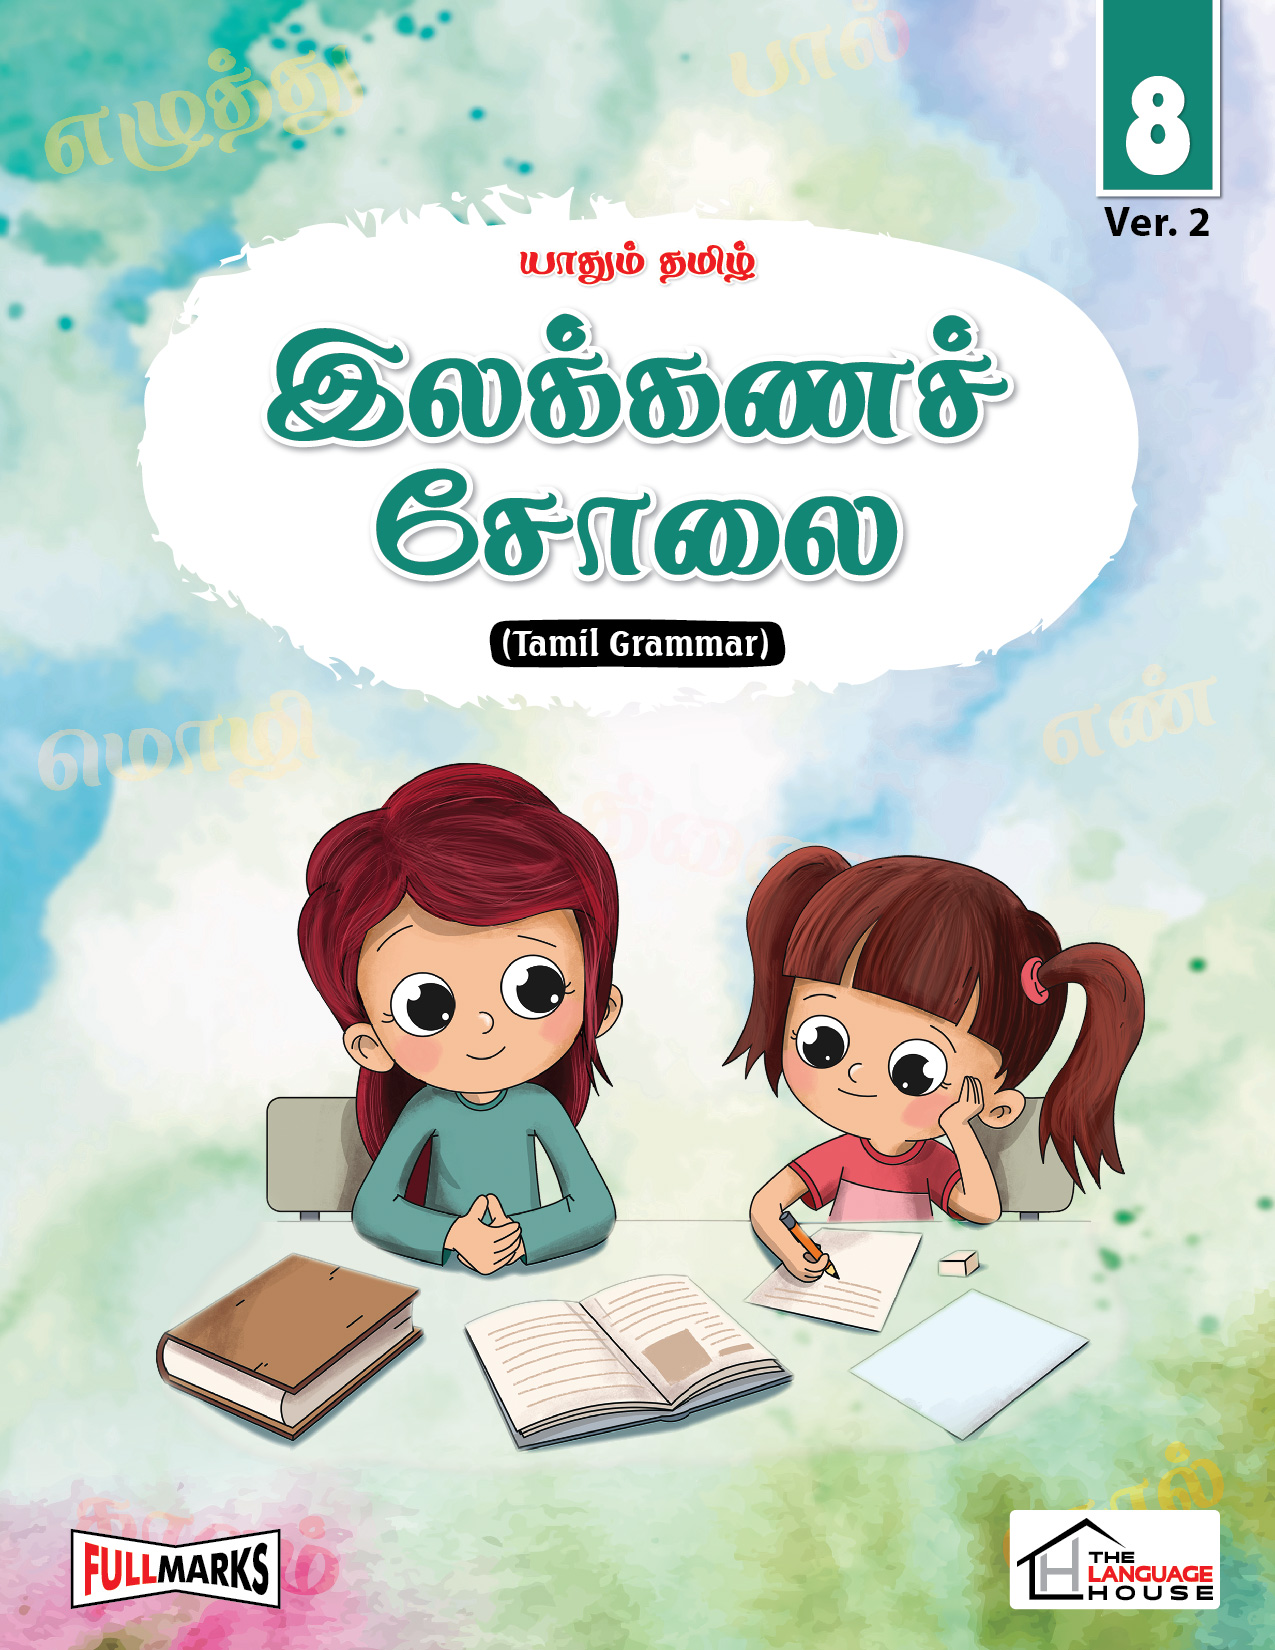 Tamil Grammar Ver. 2 Class 8